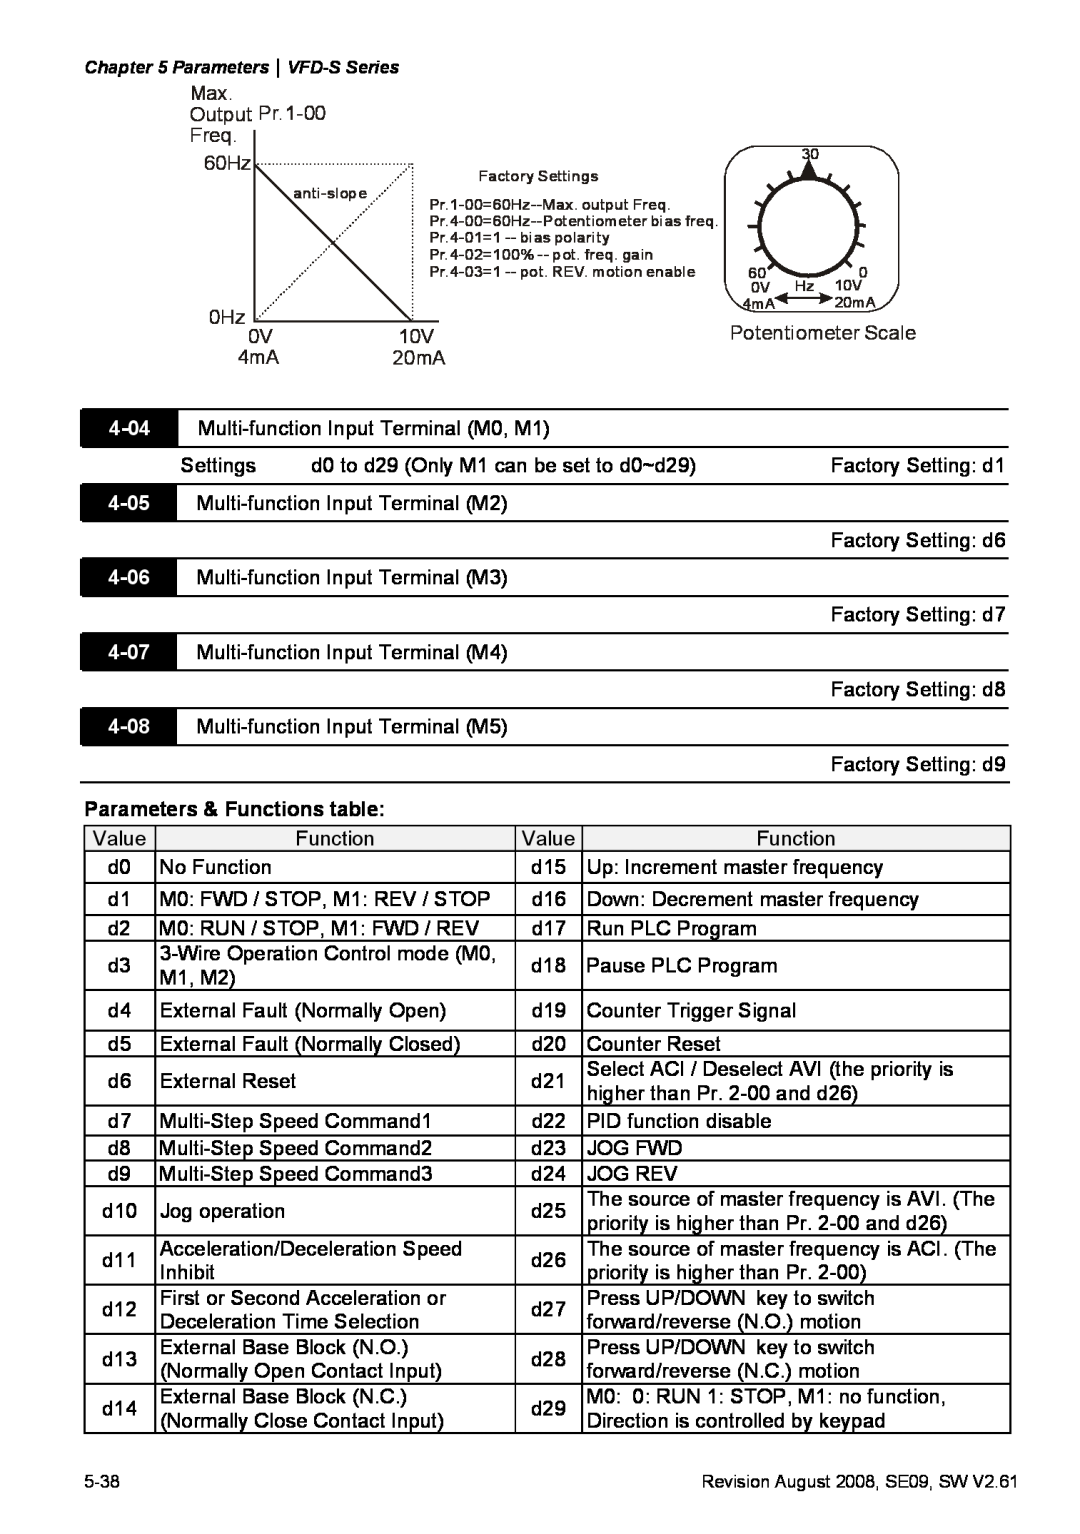 Delta Electronics VFD-S manual 4-06, 4-07, 4-08, Parameters & Functions table 